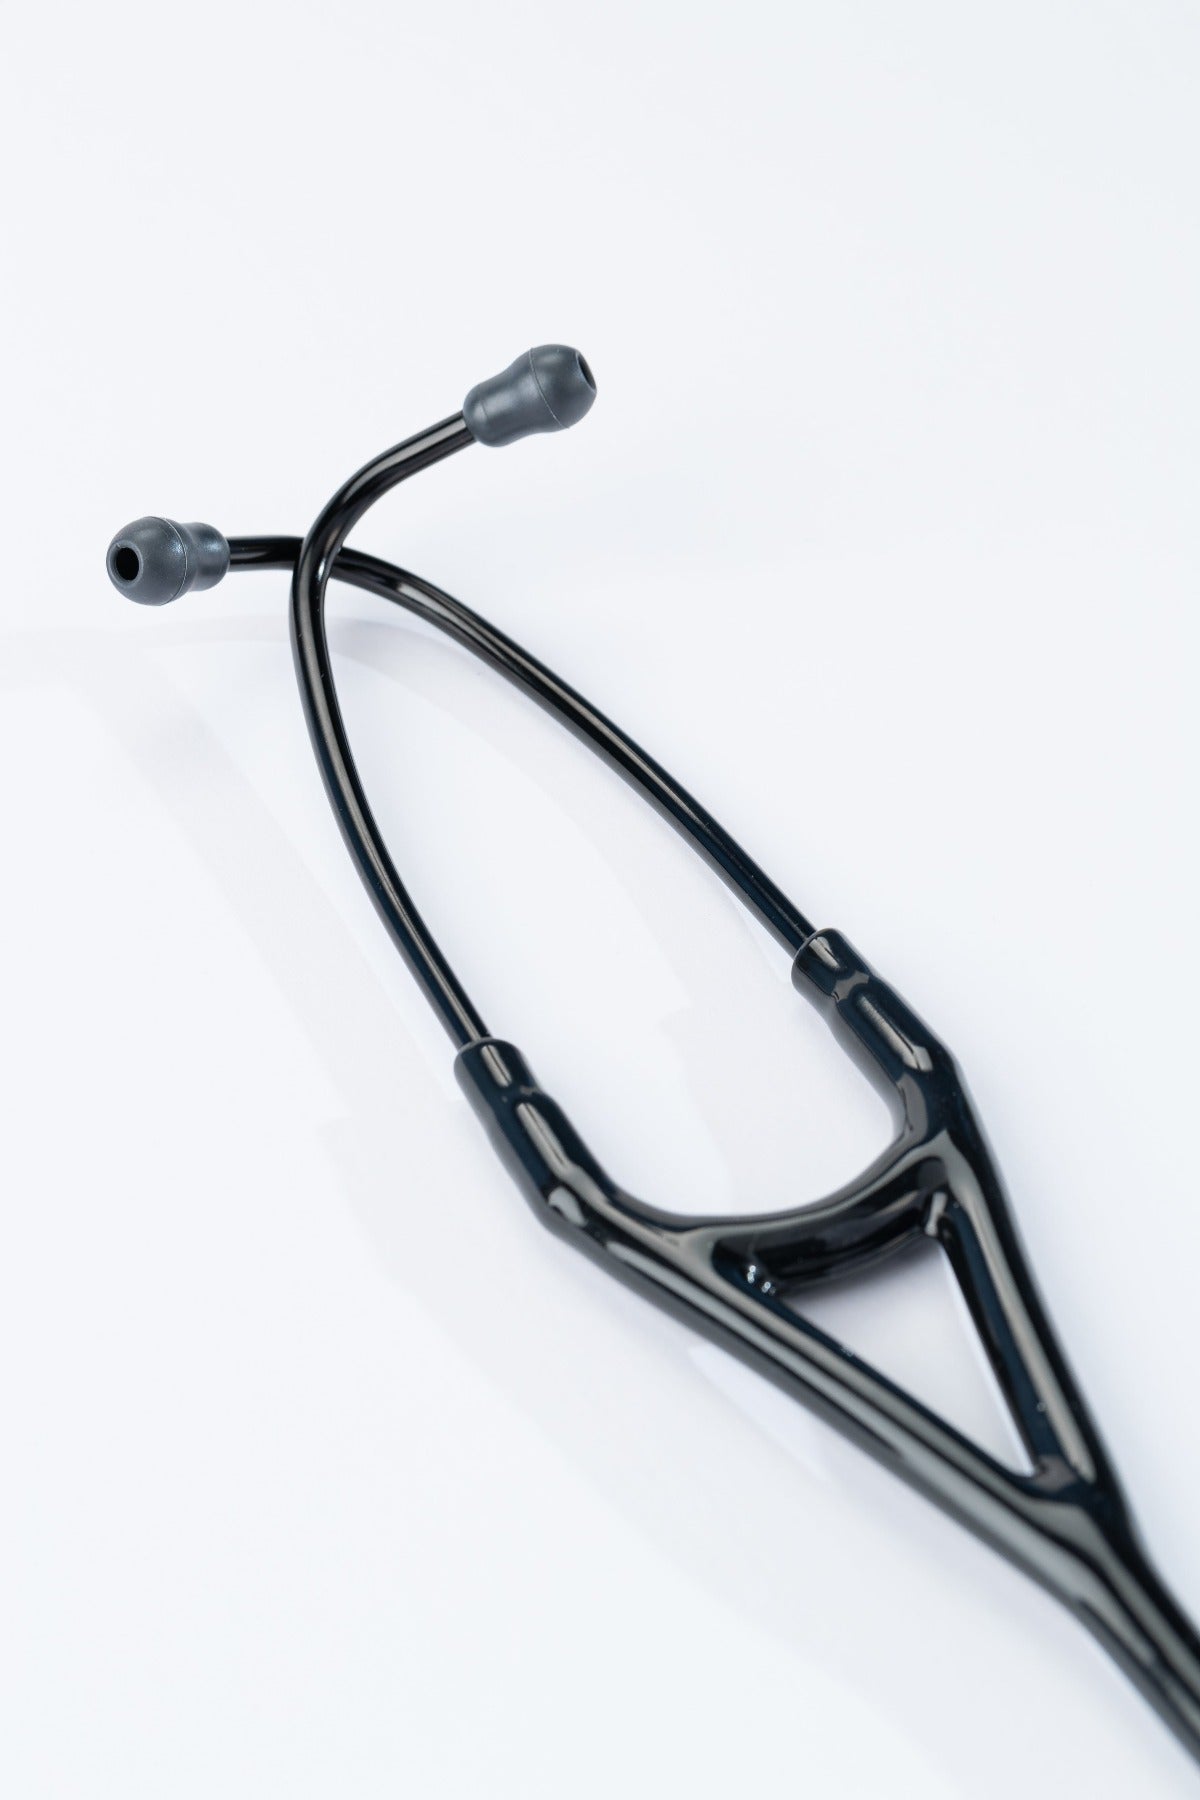 Littmann Cardiology IV Diagnostic Stethoscope Black color 6163